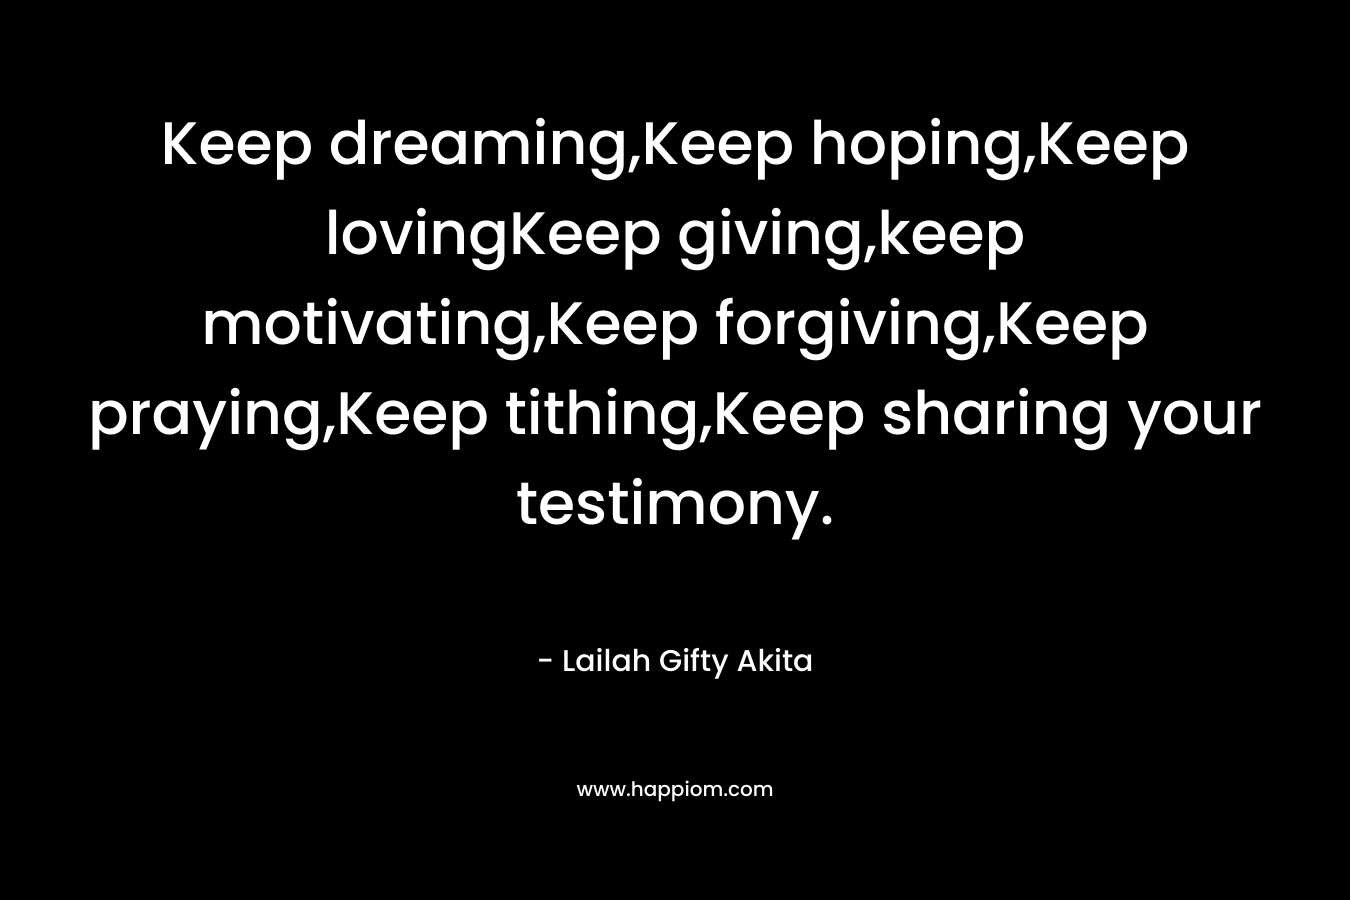 Keep dreaming,Keep hoping,Keep lovingKeep giving,keep motivating,Keep forgiving,Keep praying,Keep tithing,Keep sharing your testimony.